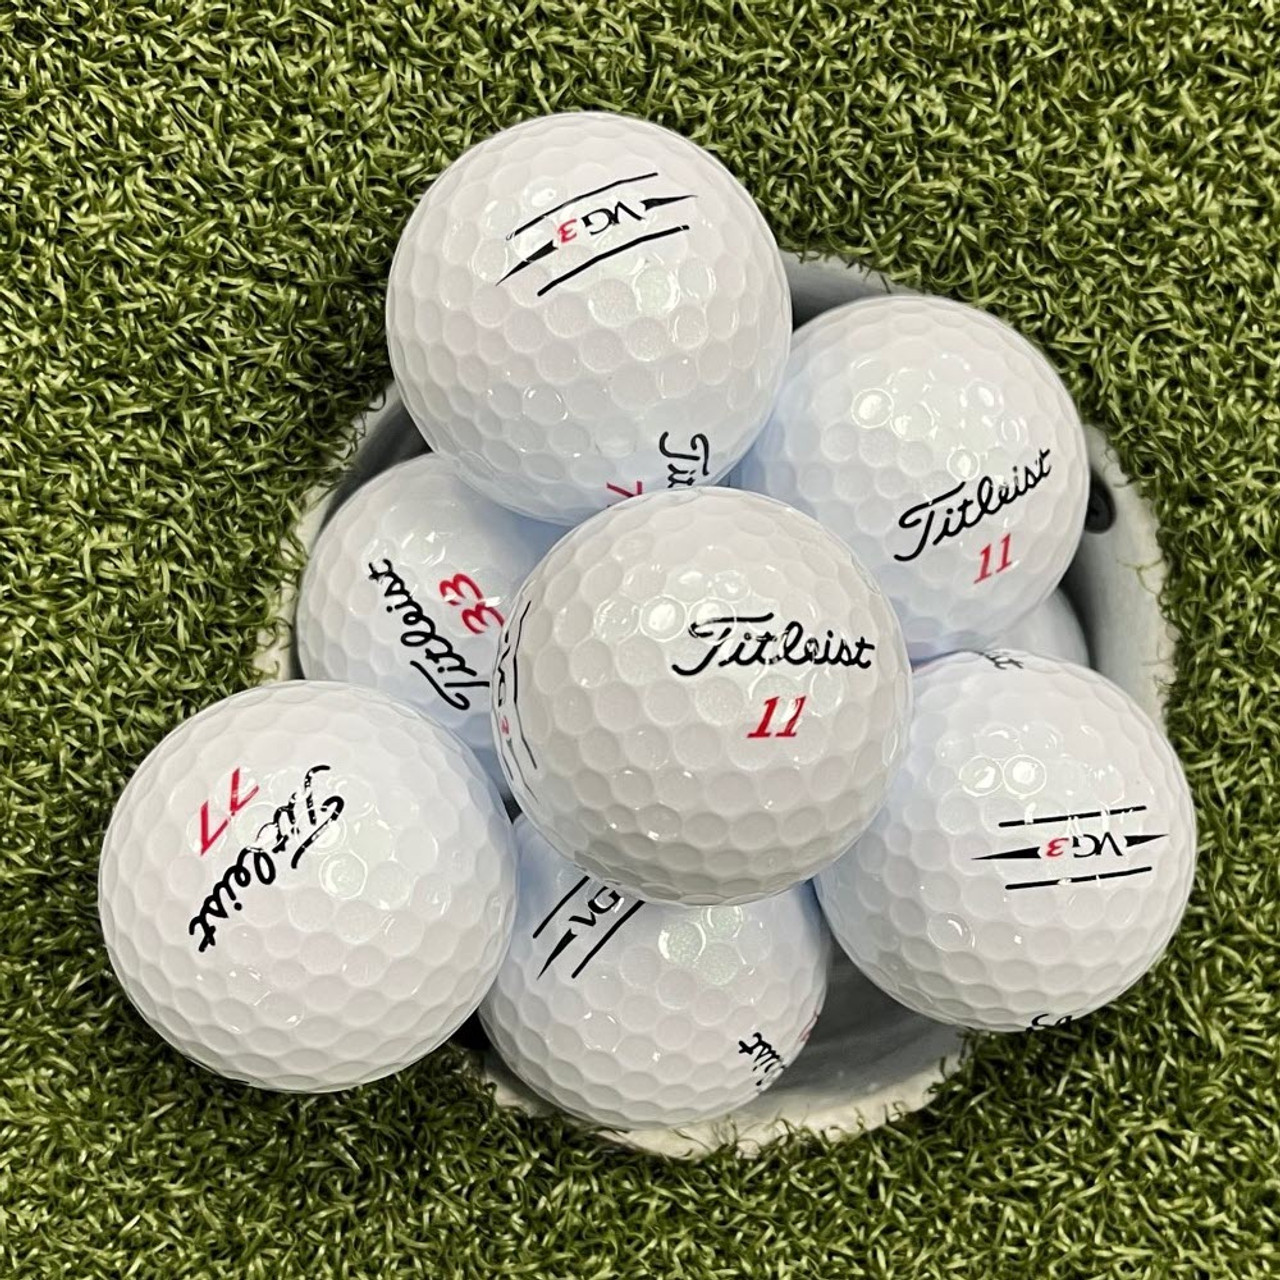 Titleist VG3 Golf Balls - SPECIAL BUY!